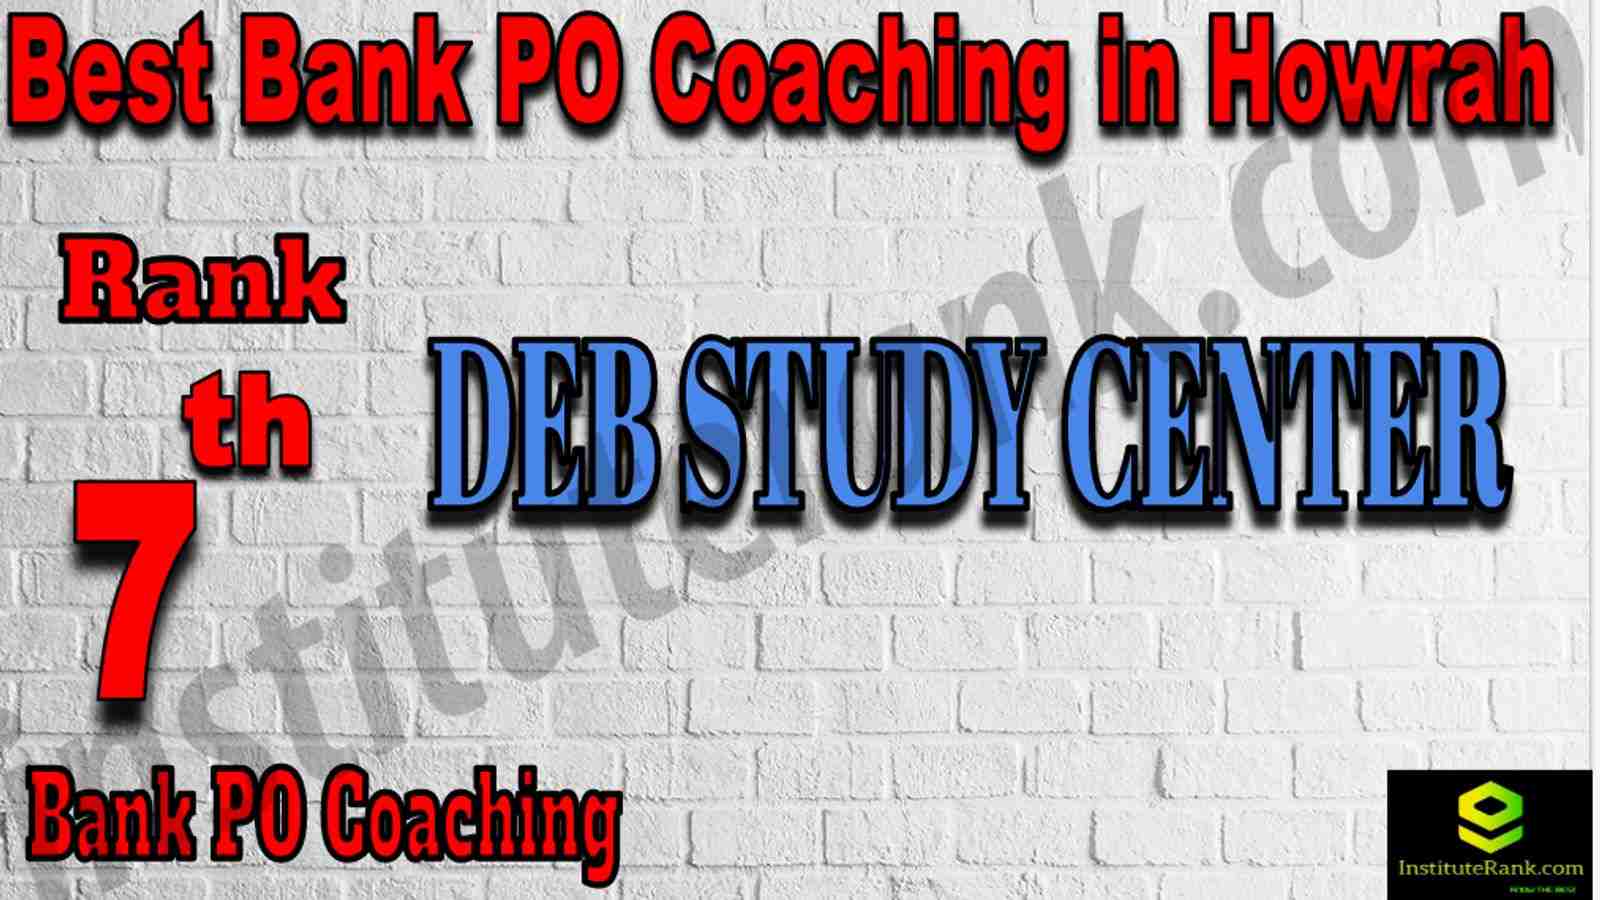 7th Best Bank PO Coaching in Howrah